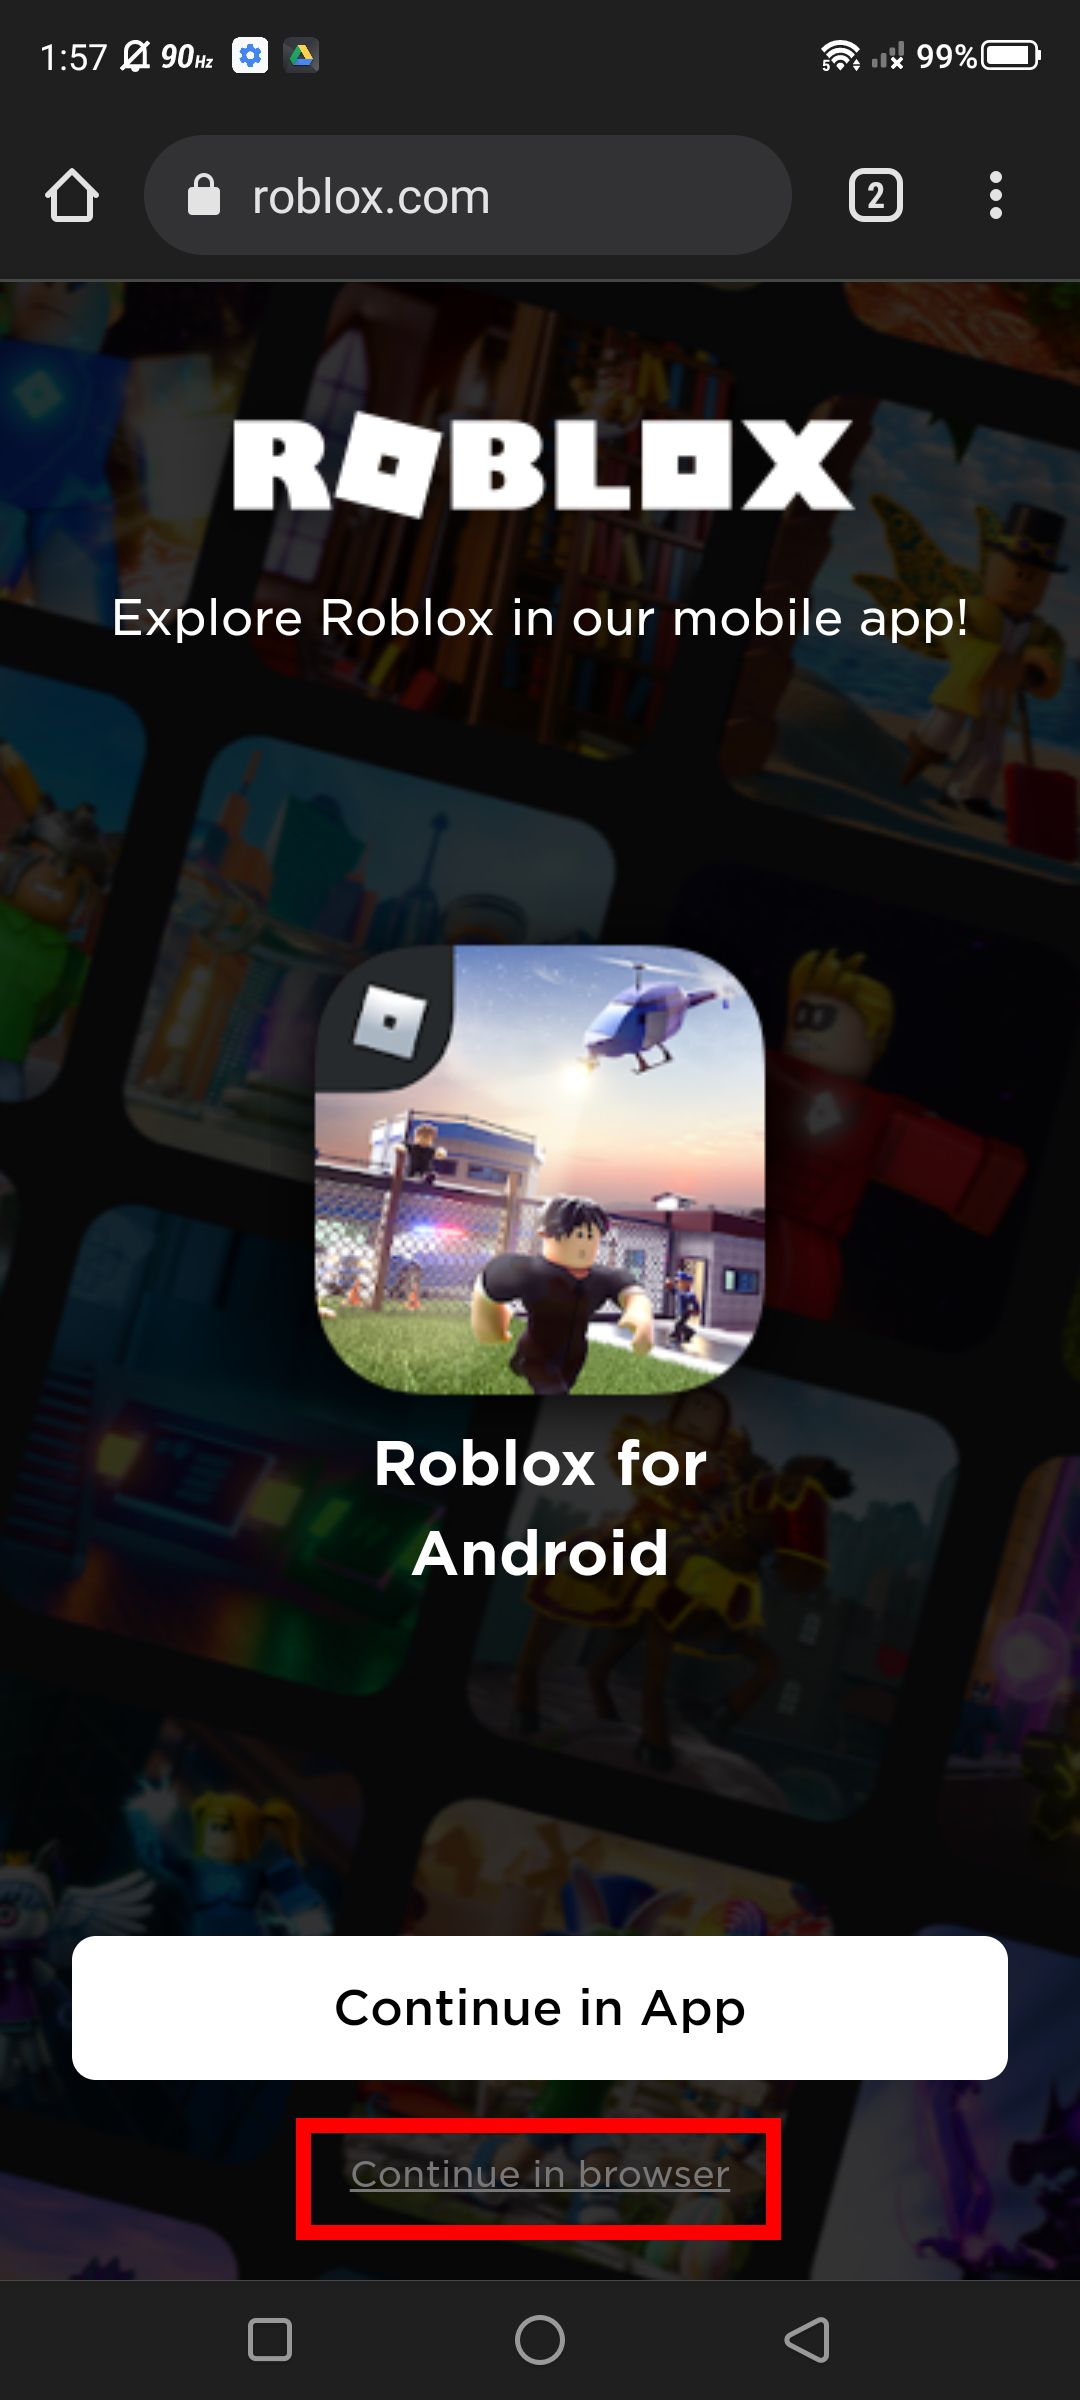 Screenshot of accessing Roblox website through the Roblox app